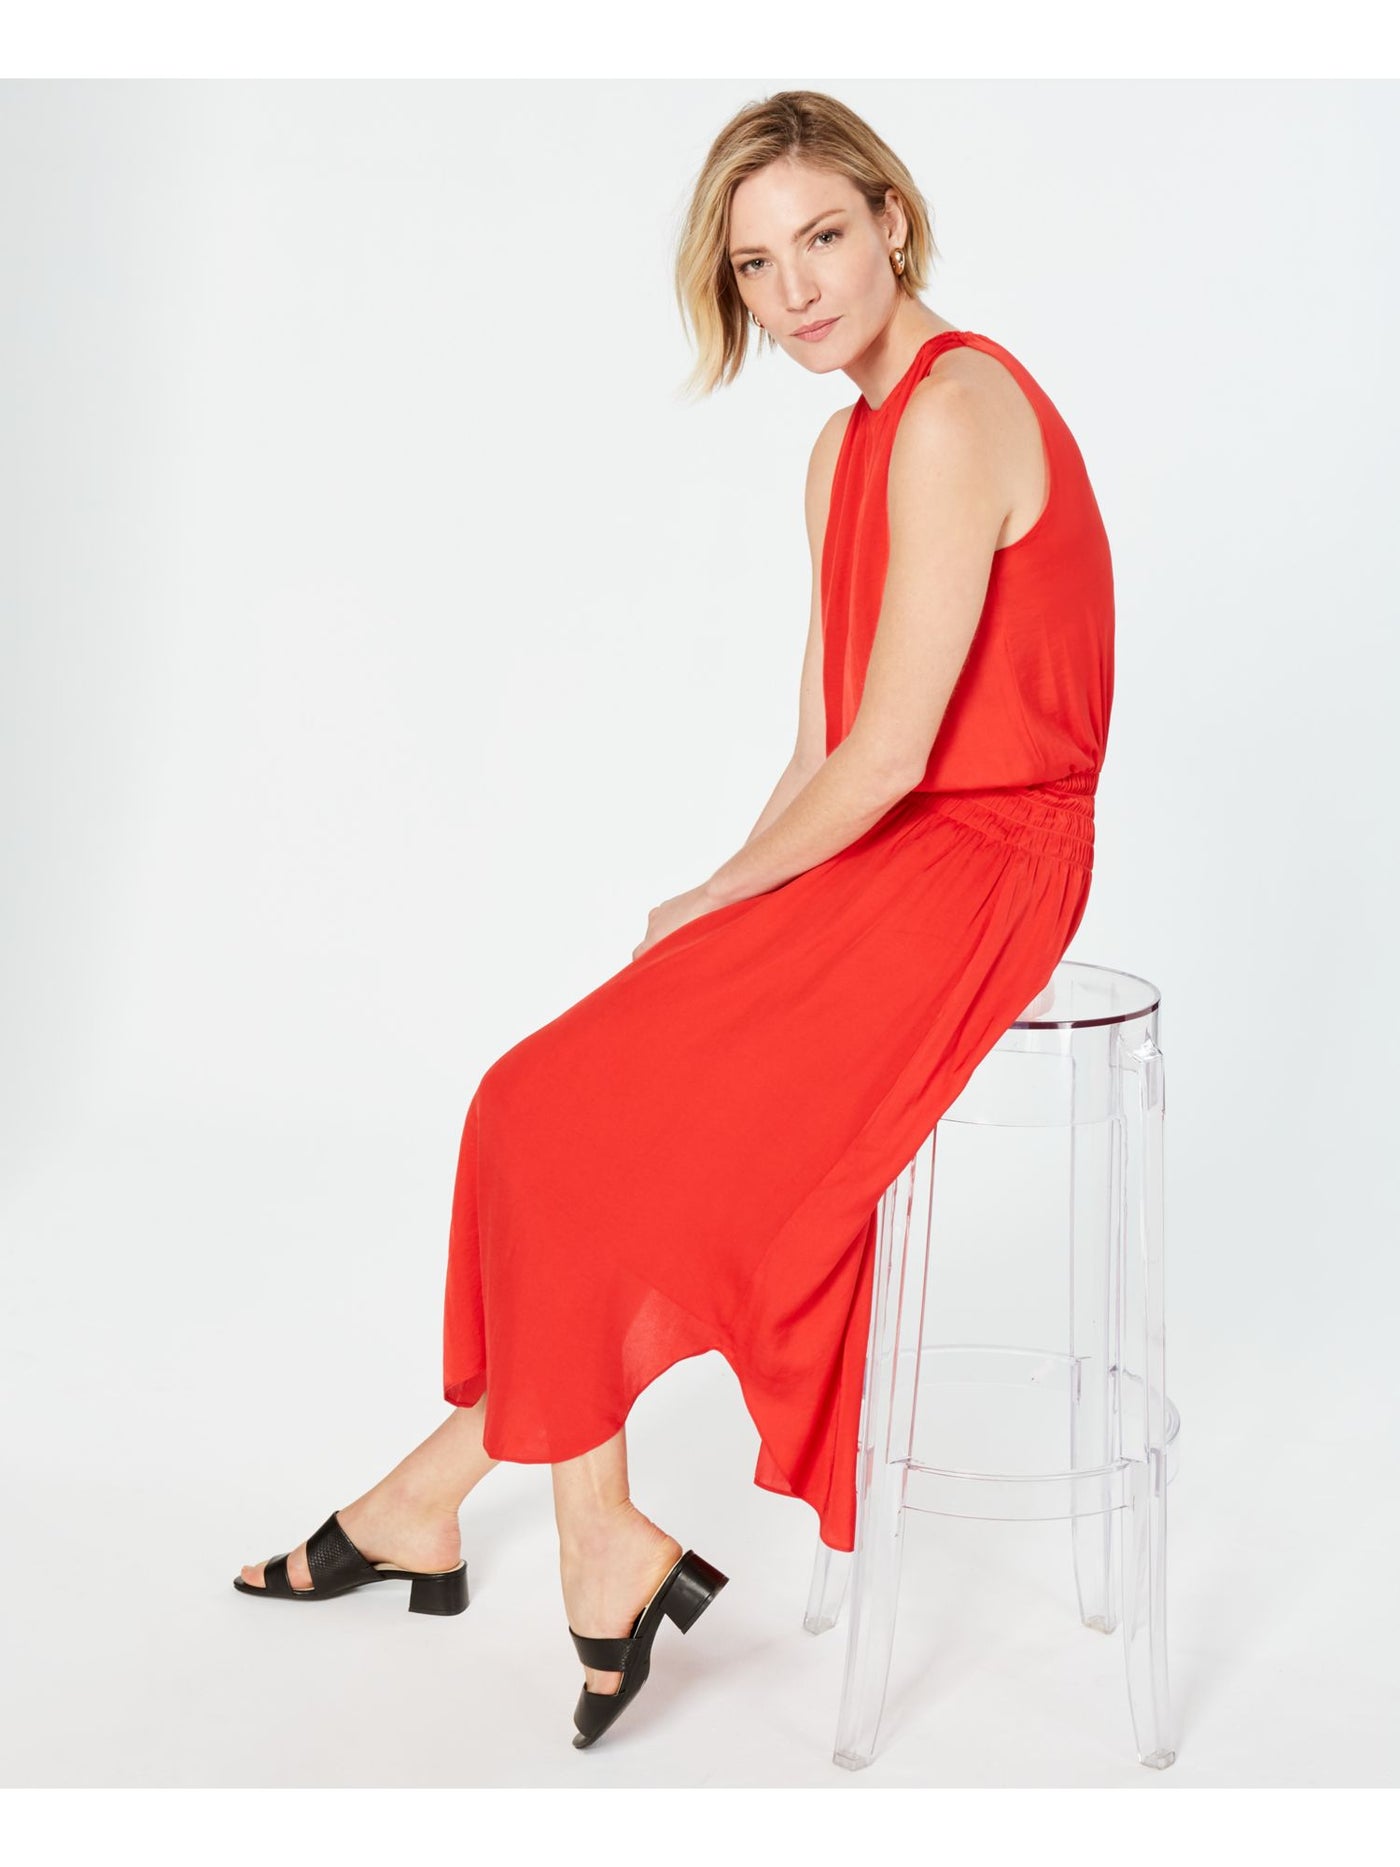 ALFANI Womens Red Ruffled Sleeveless Jewel Neck Midi Sheath Dress Plus Size: 2X